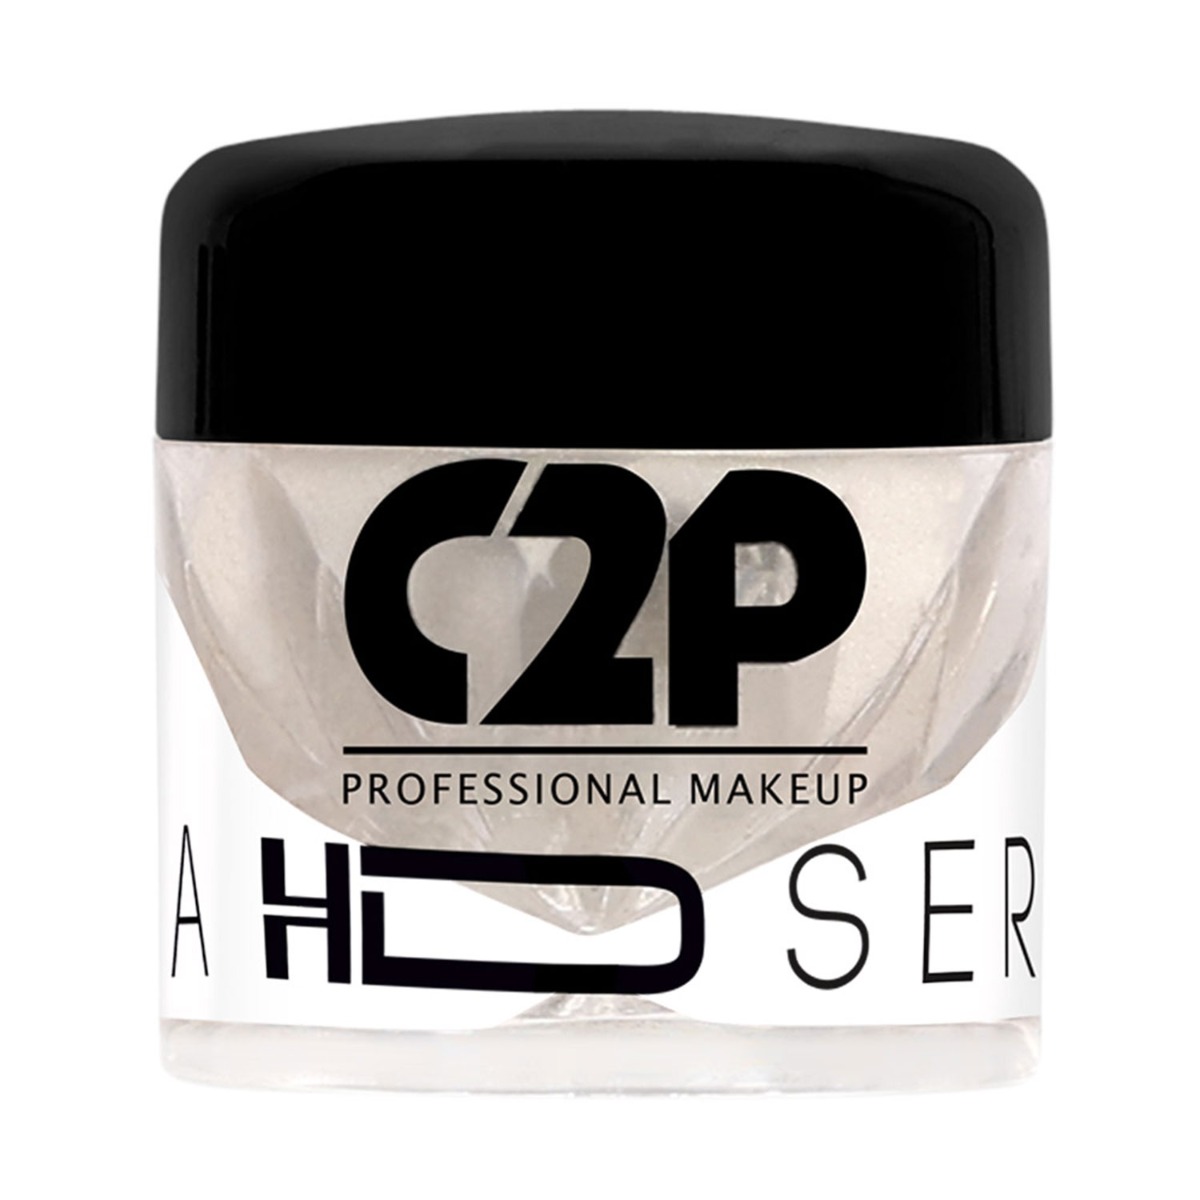 C2P Pro HD Loose Precious Pigments - Wishing Bell 02, 2gm